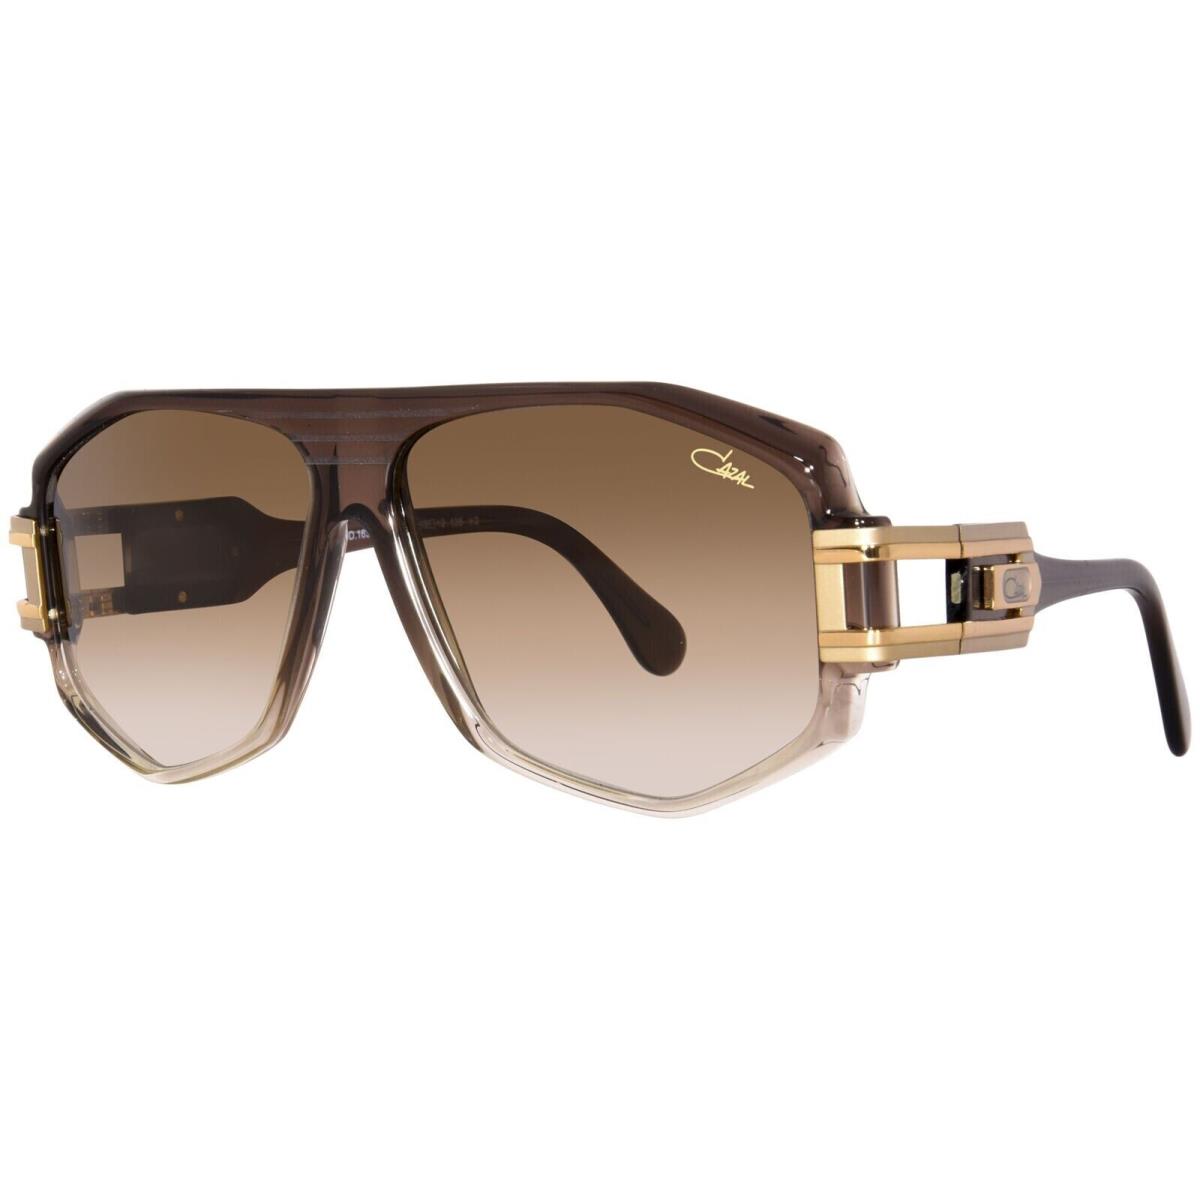 Cazal Legends Mod. 163/3 Col. 012 Brown Nougat w Gold Trim Sunglasses Germany